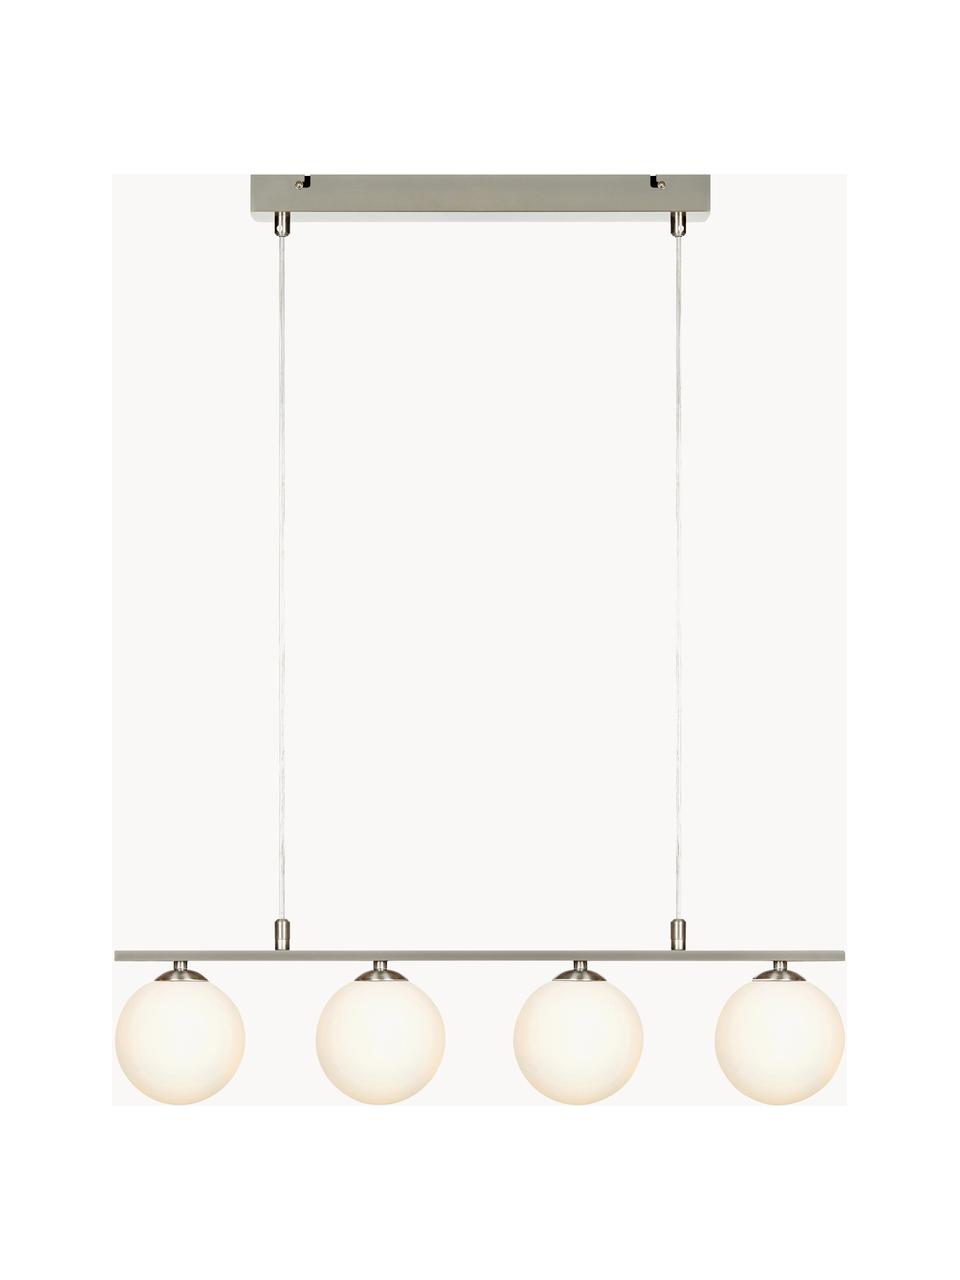 Hanglamp Quattro, Wit, zilverkleurig, B 66 x H 17 cm